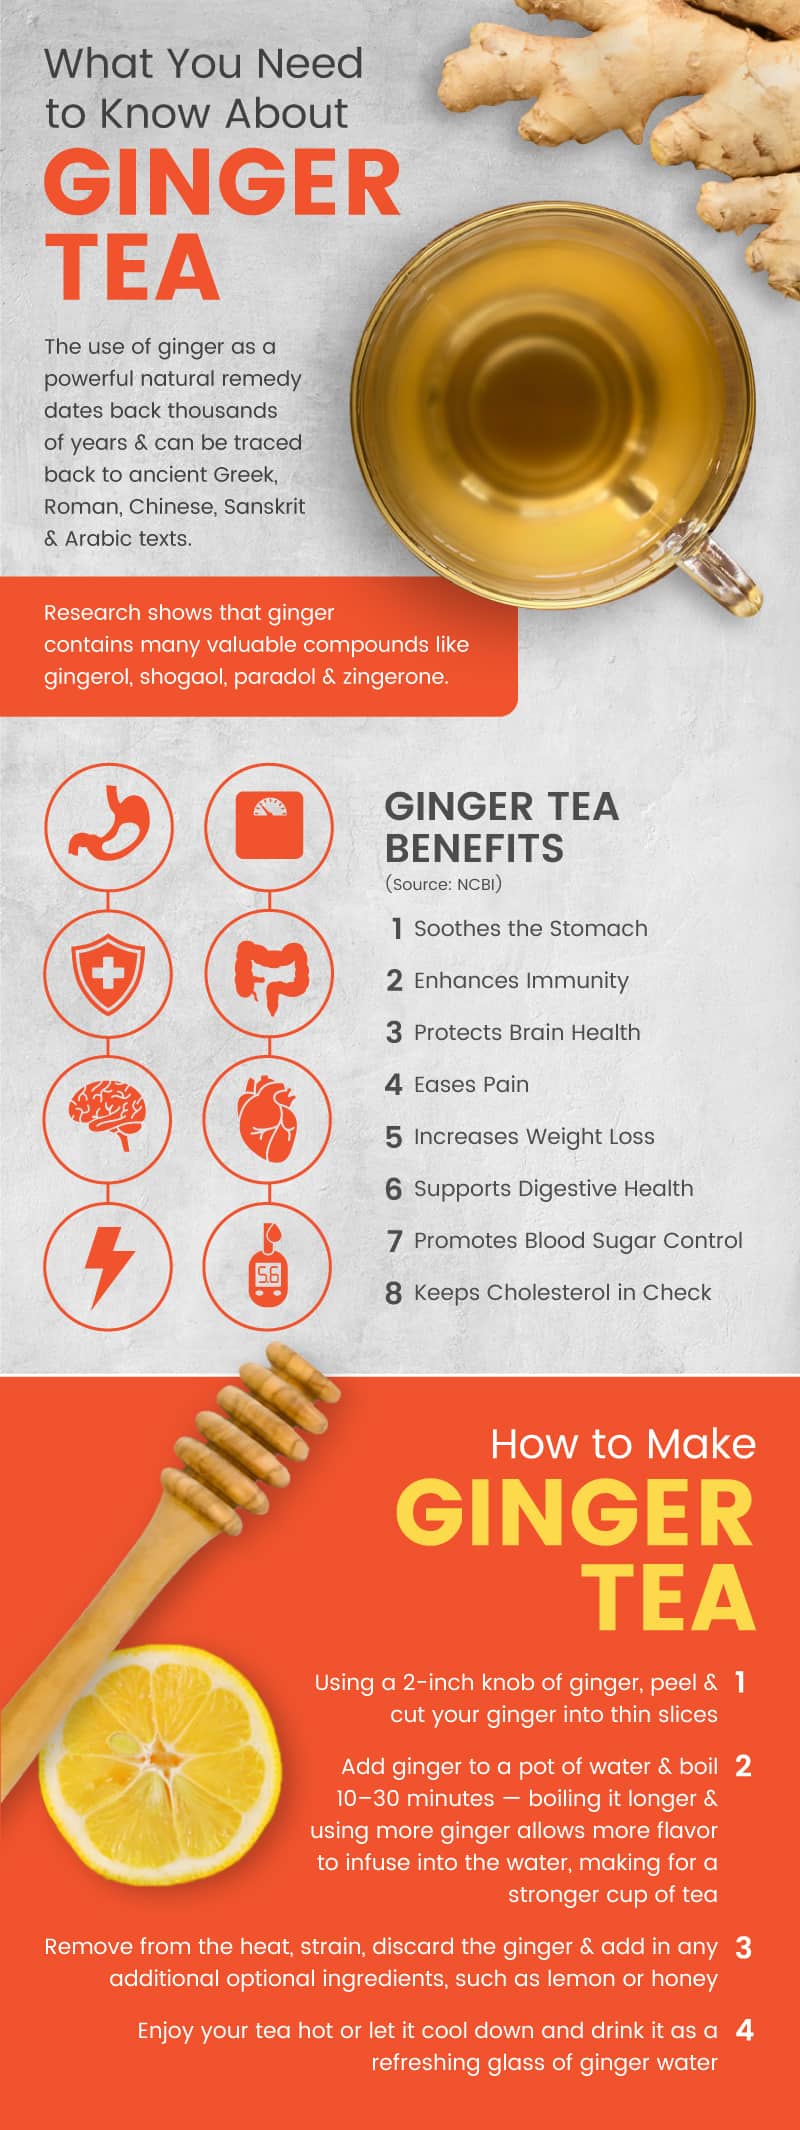 Ginger tea benefits - Dr. Axe